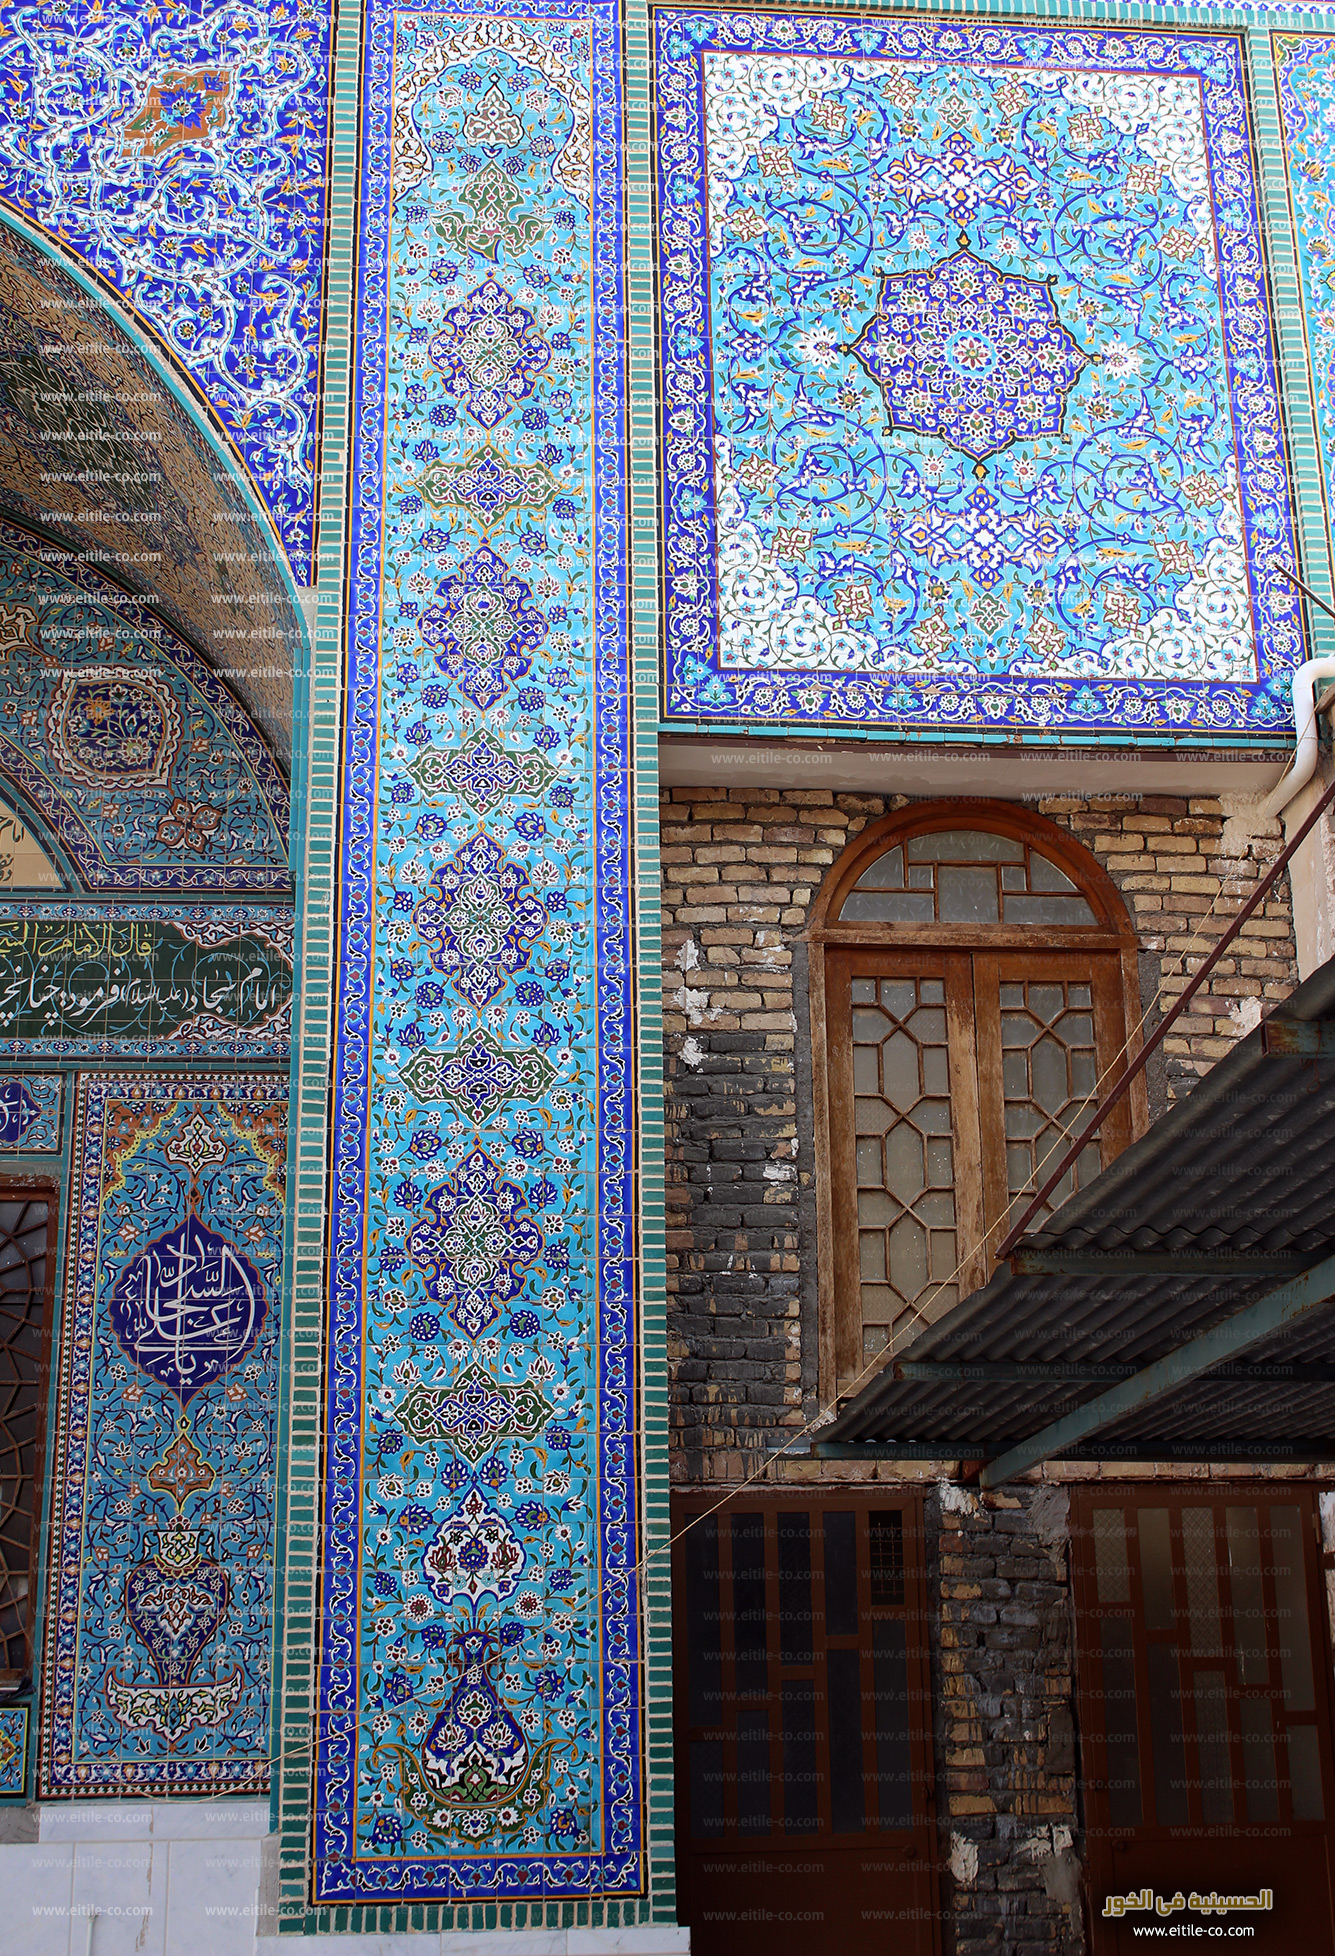 Iranian mosque tile supplier, www.eitile-co.com